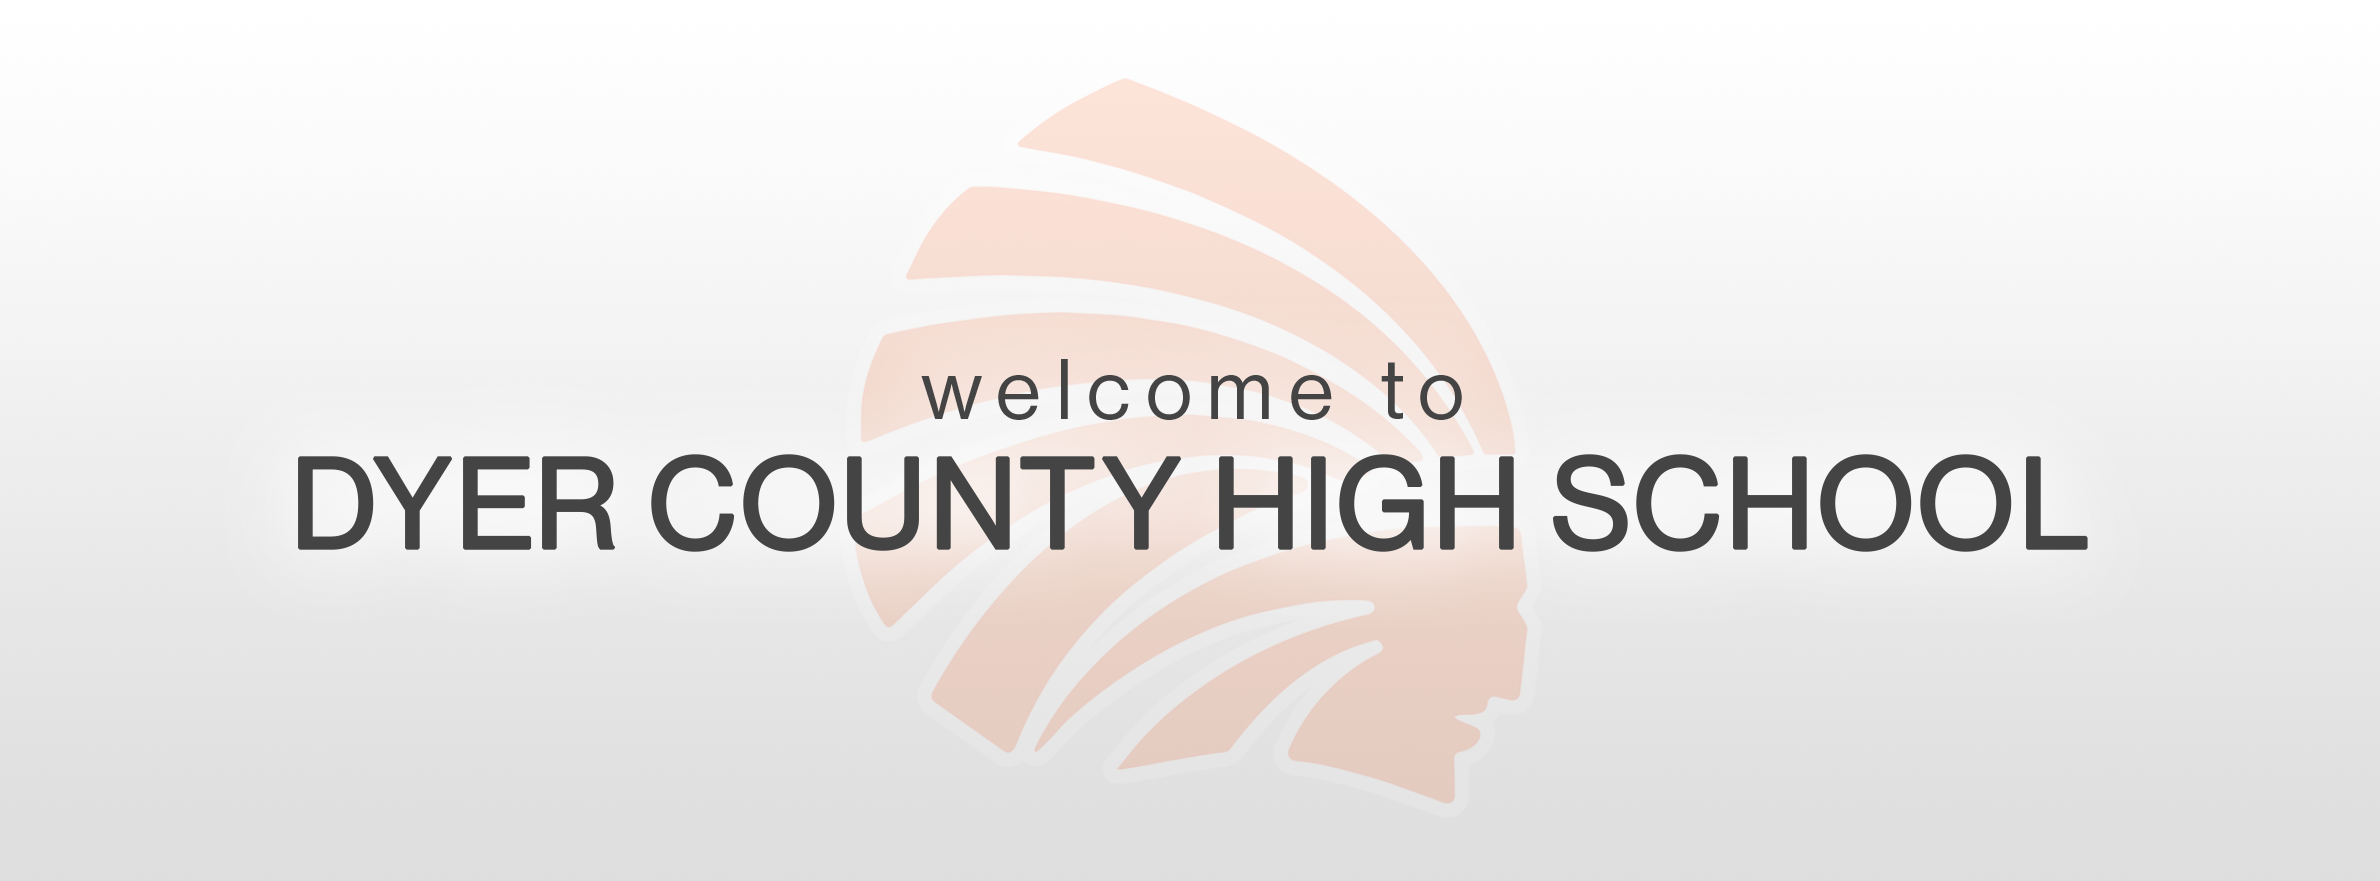 dyer county high school